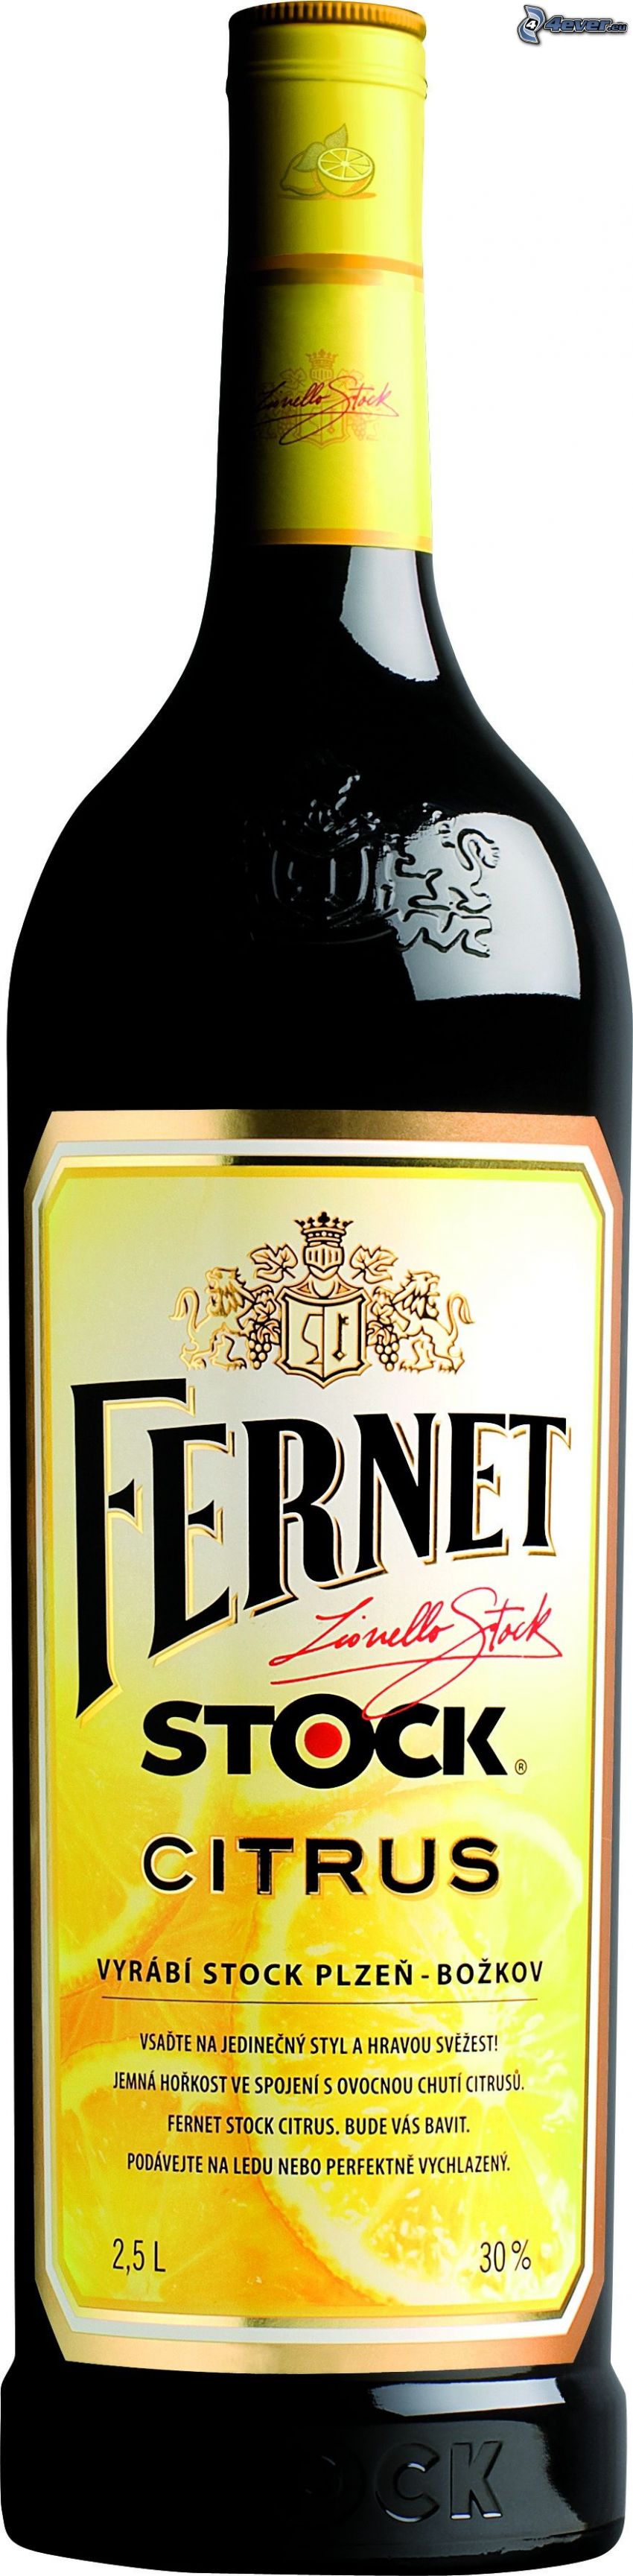 Fernet Stock Citrus, bottle, alcohol